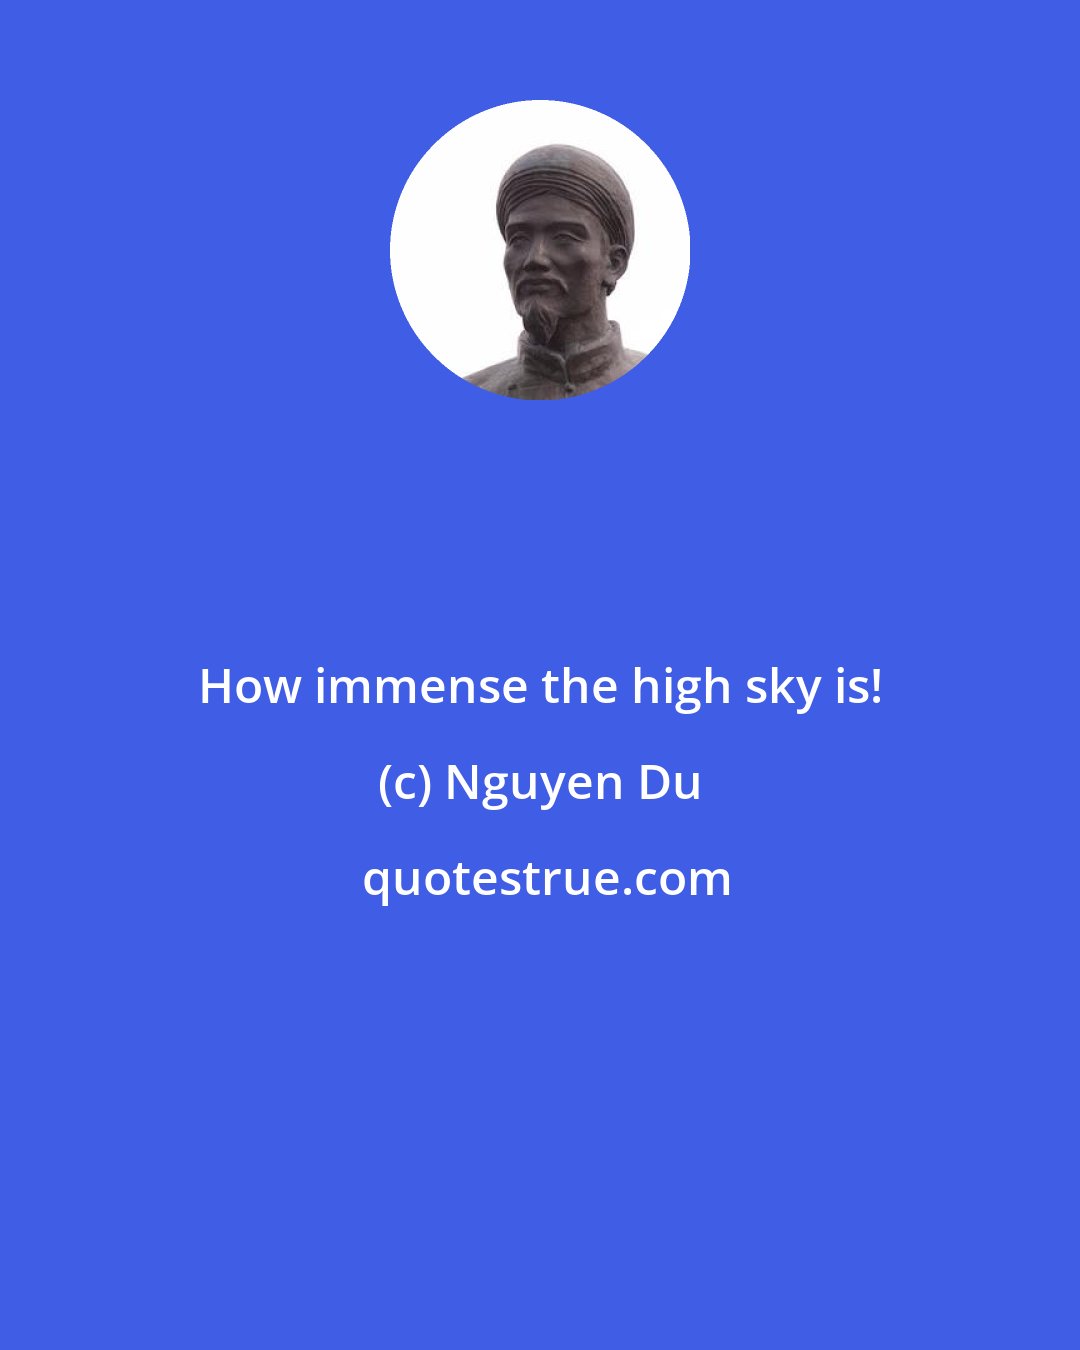 Nguyen Du: How immense the high sky is!